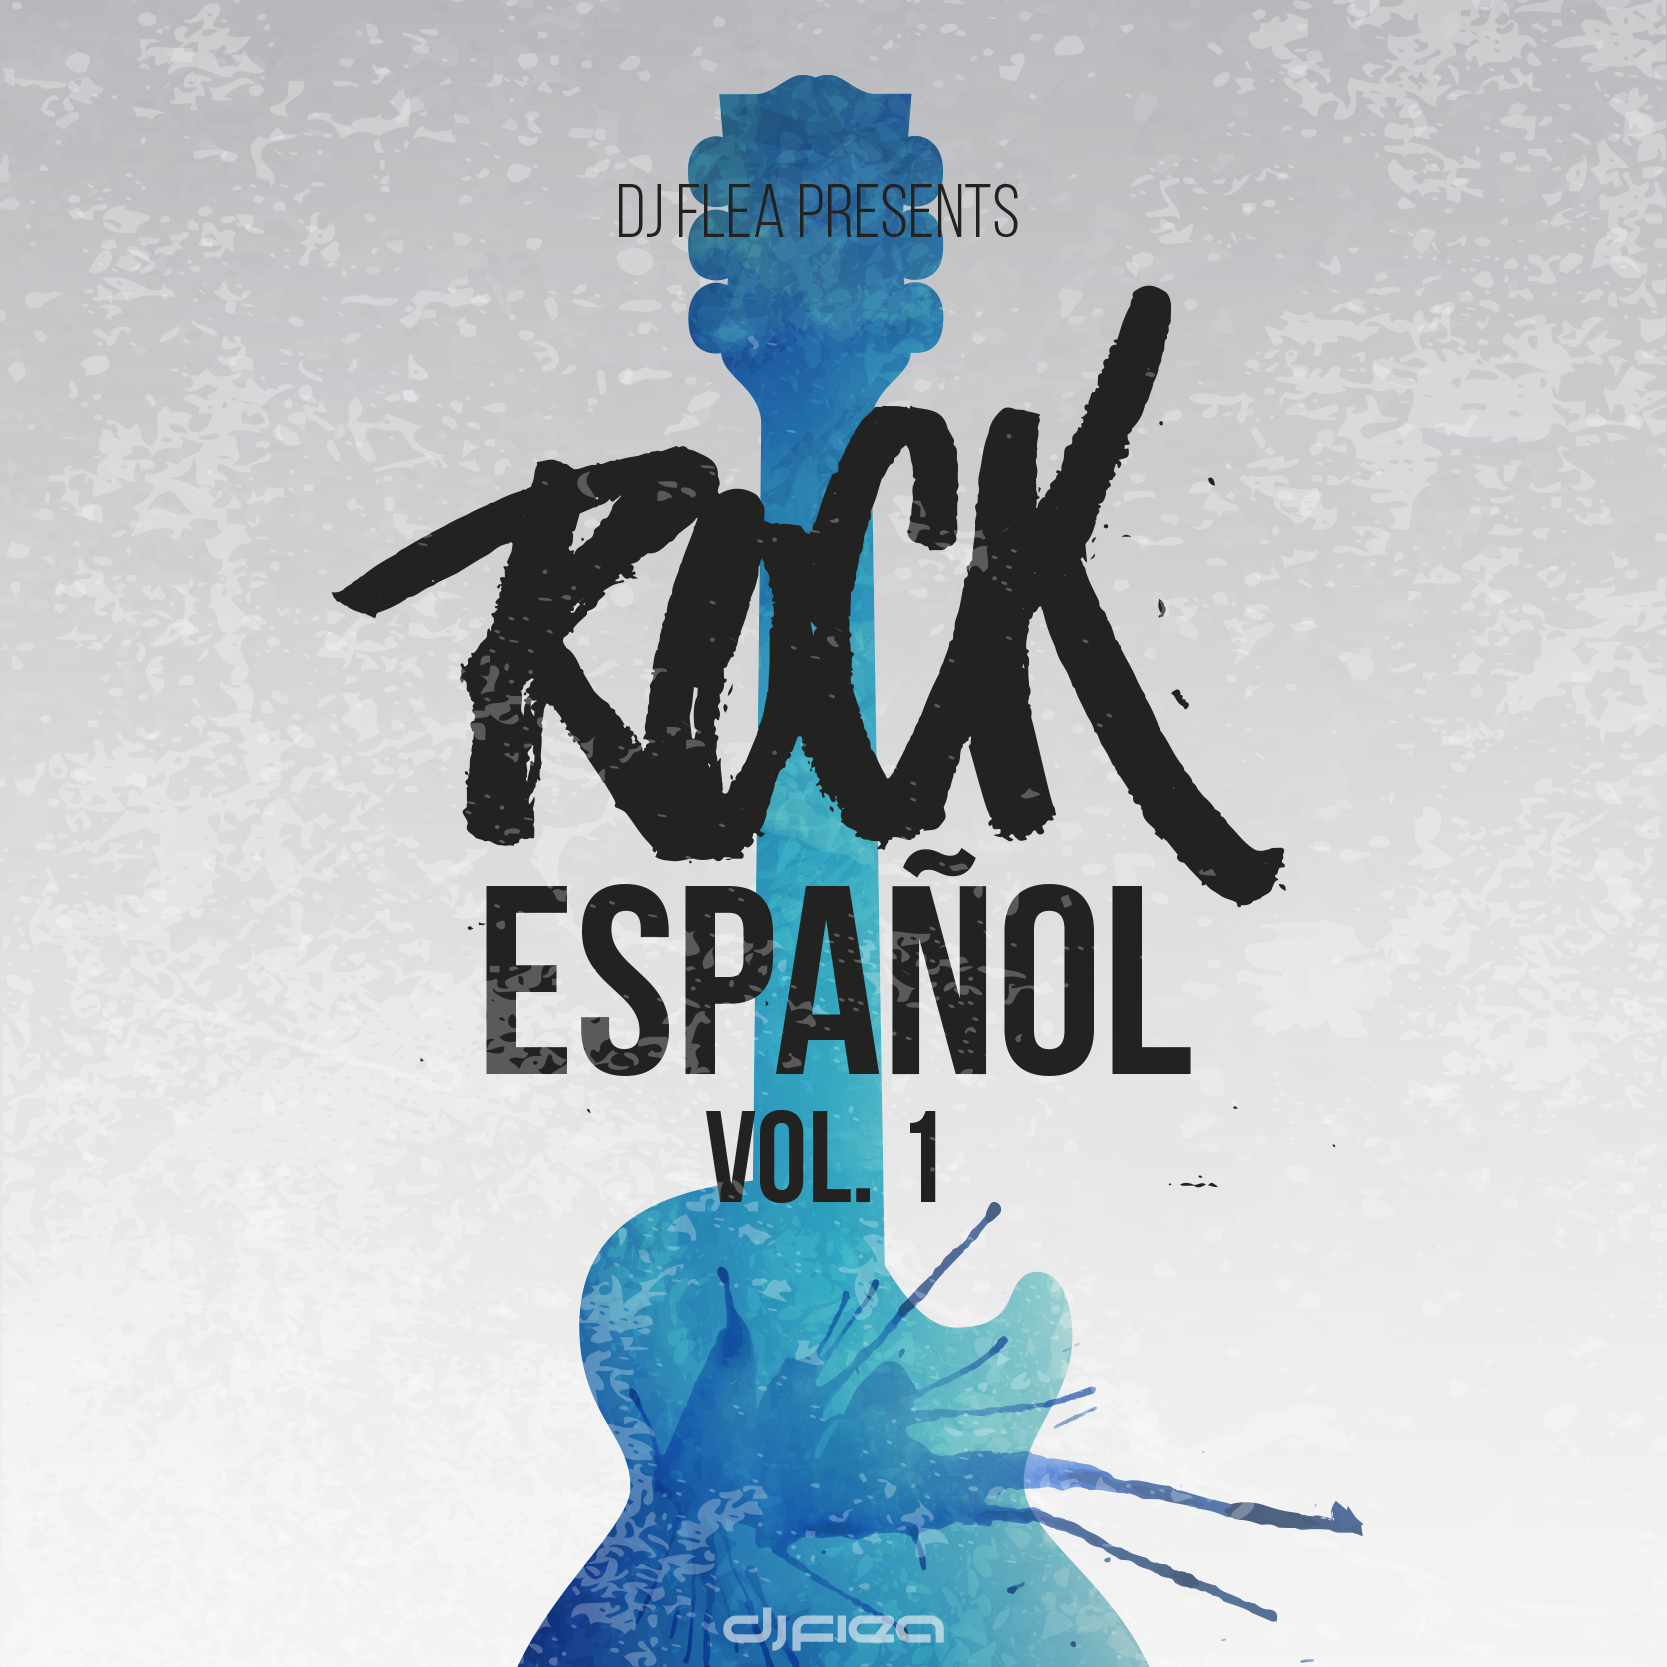 Refinar Ingenieria lechuga Rock Español, Vol. 1 - DJ Flea